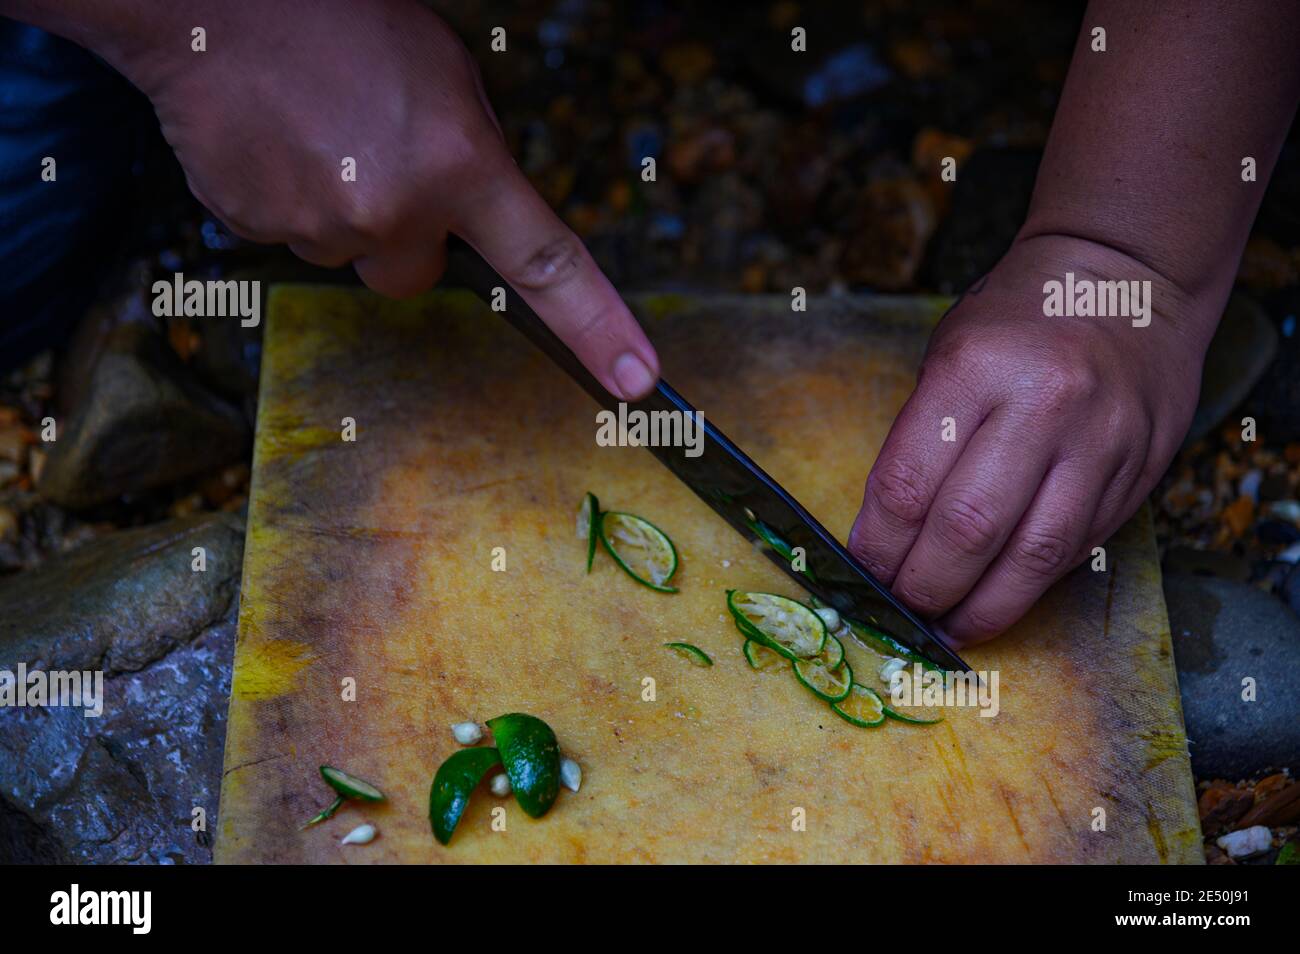 man slicing limes Stock Photo